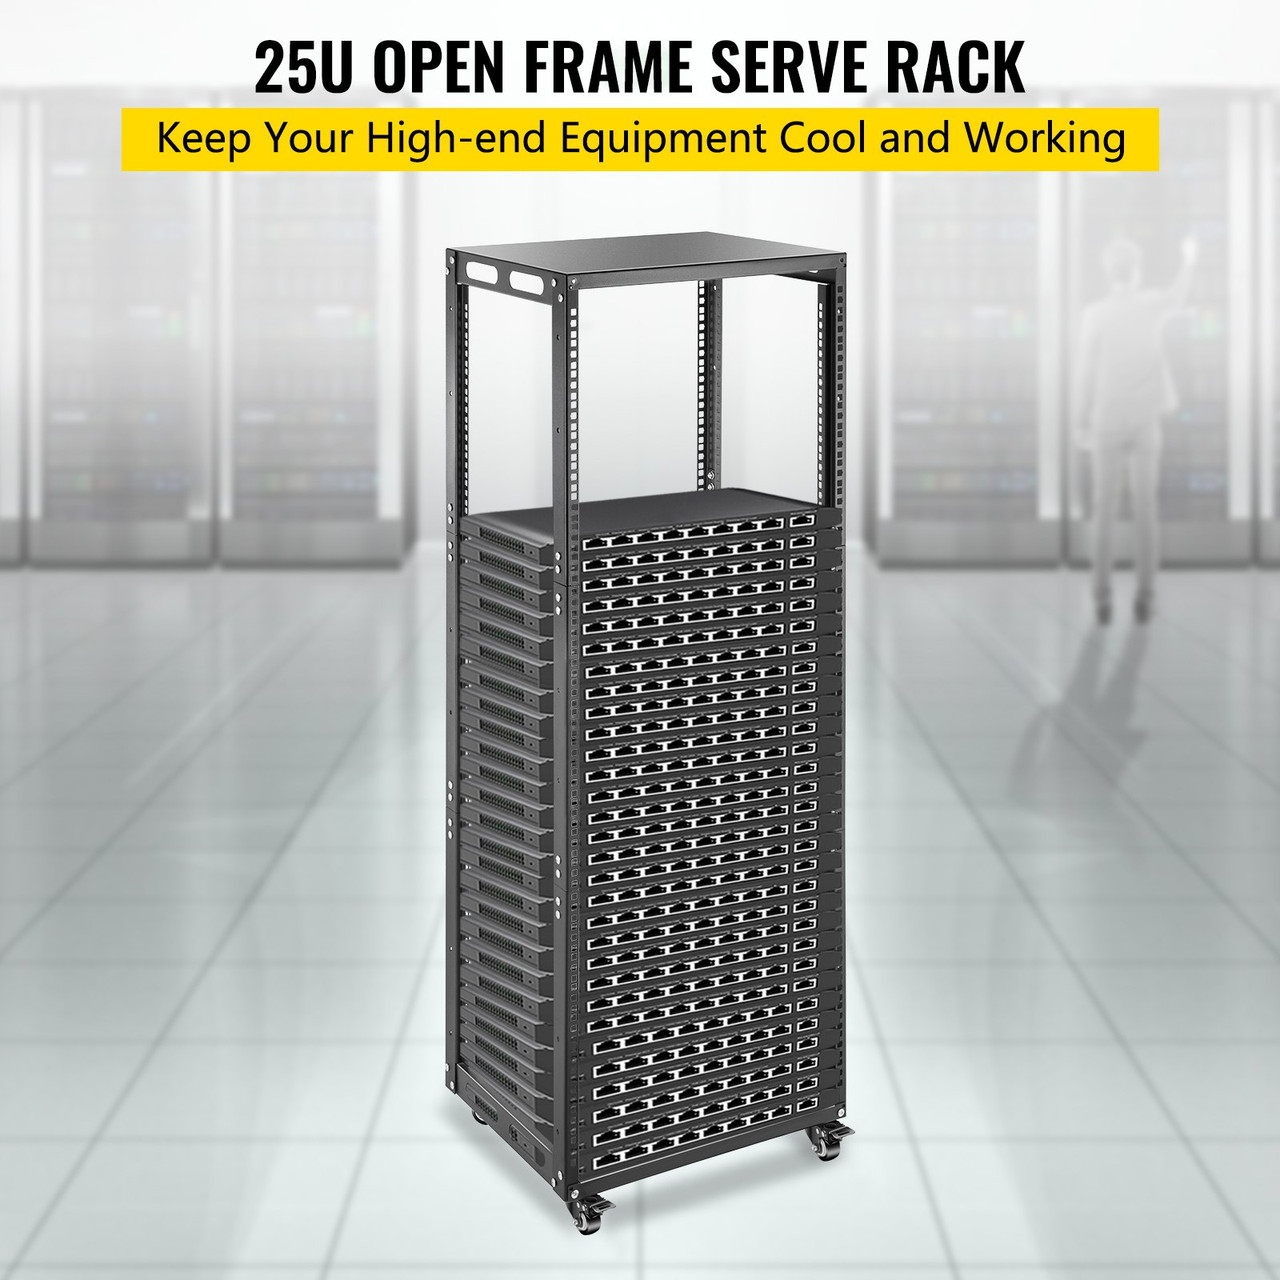 Server Rack, 25U Open Frame Rack, 4-Post IT Server Network Relay Rack, 19 Inch Server/Audio Network Equipment Rack Cold Rolled Steel, Heavy Duty Rack w/Casters, Holds Network Servers & AV Gear